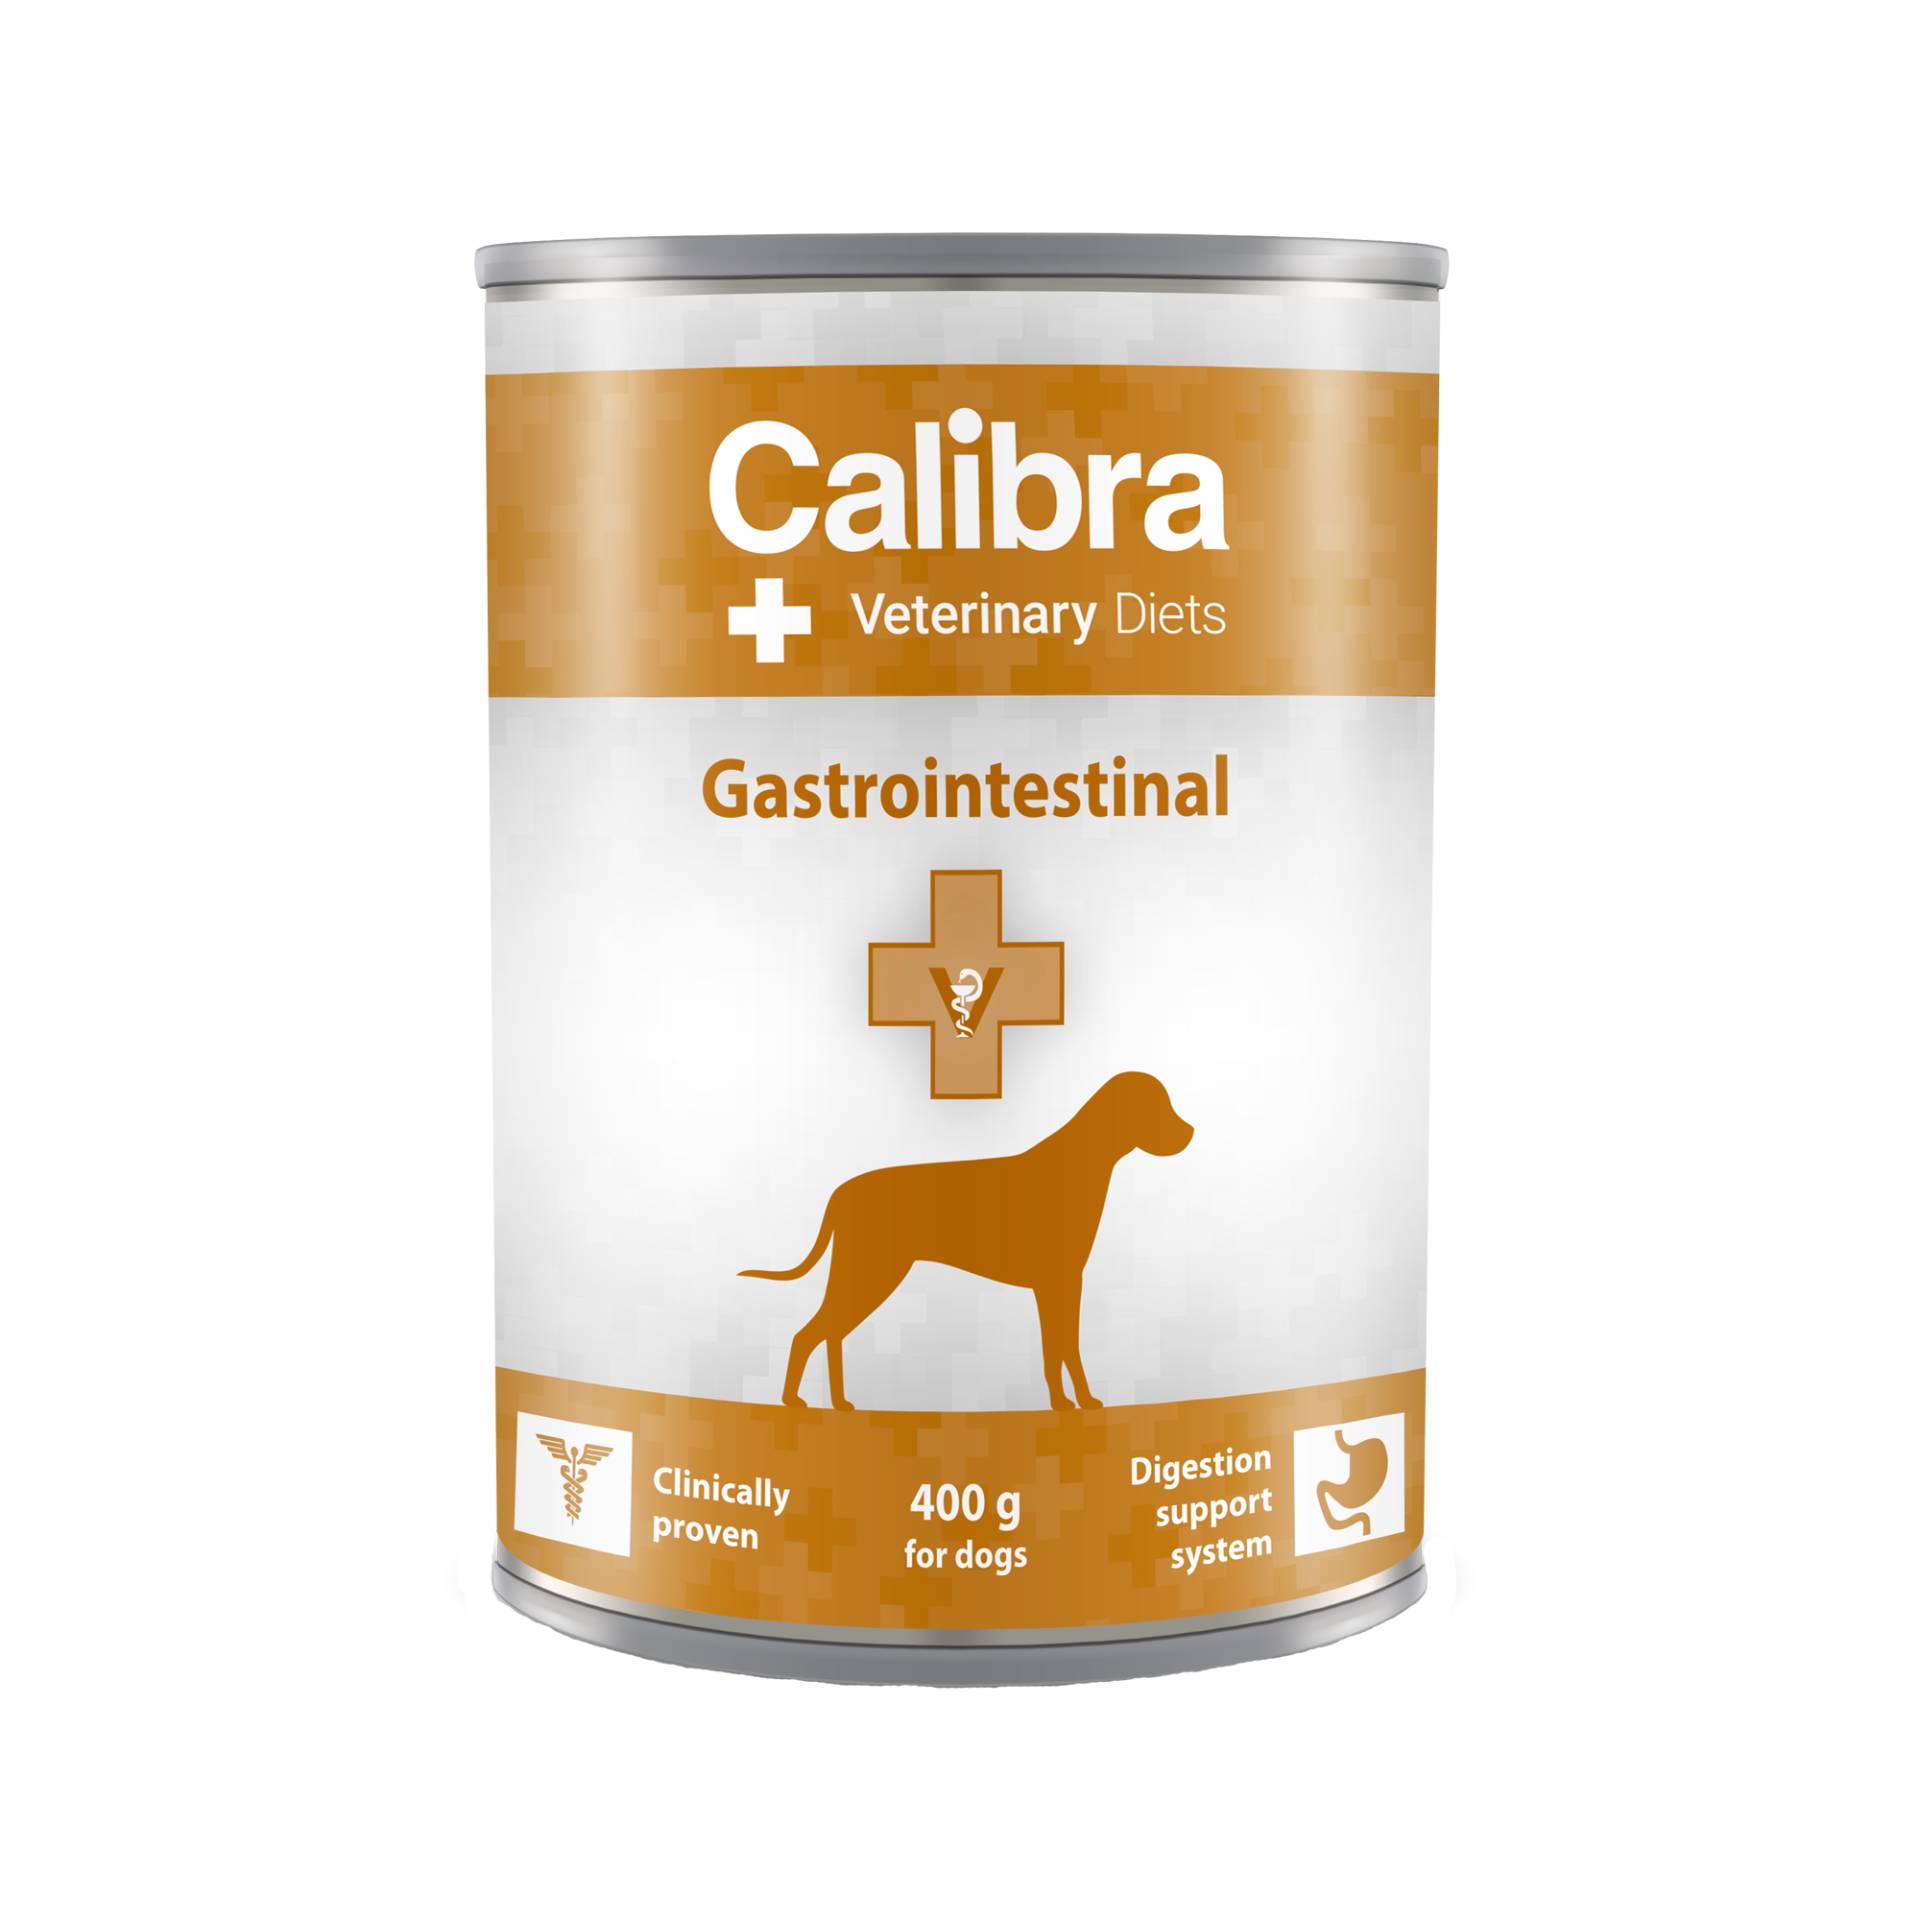 Calibra Veterinary Diets Gastrointestinal Hundefutter - Dosen - 6 x 400 g von Calibra